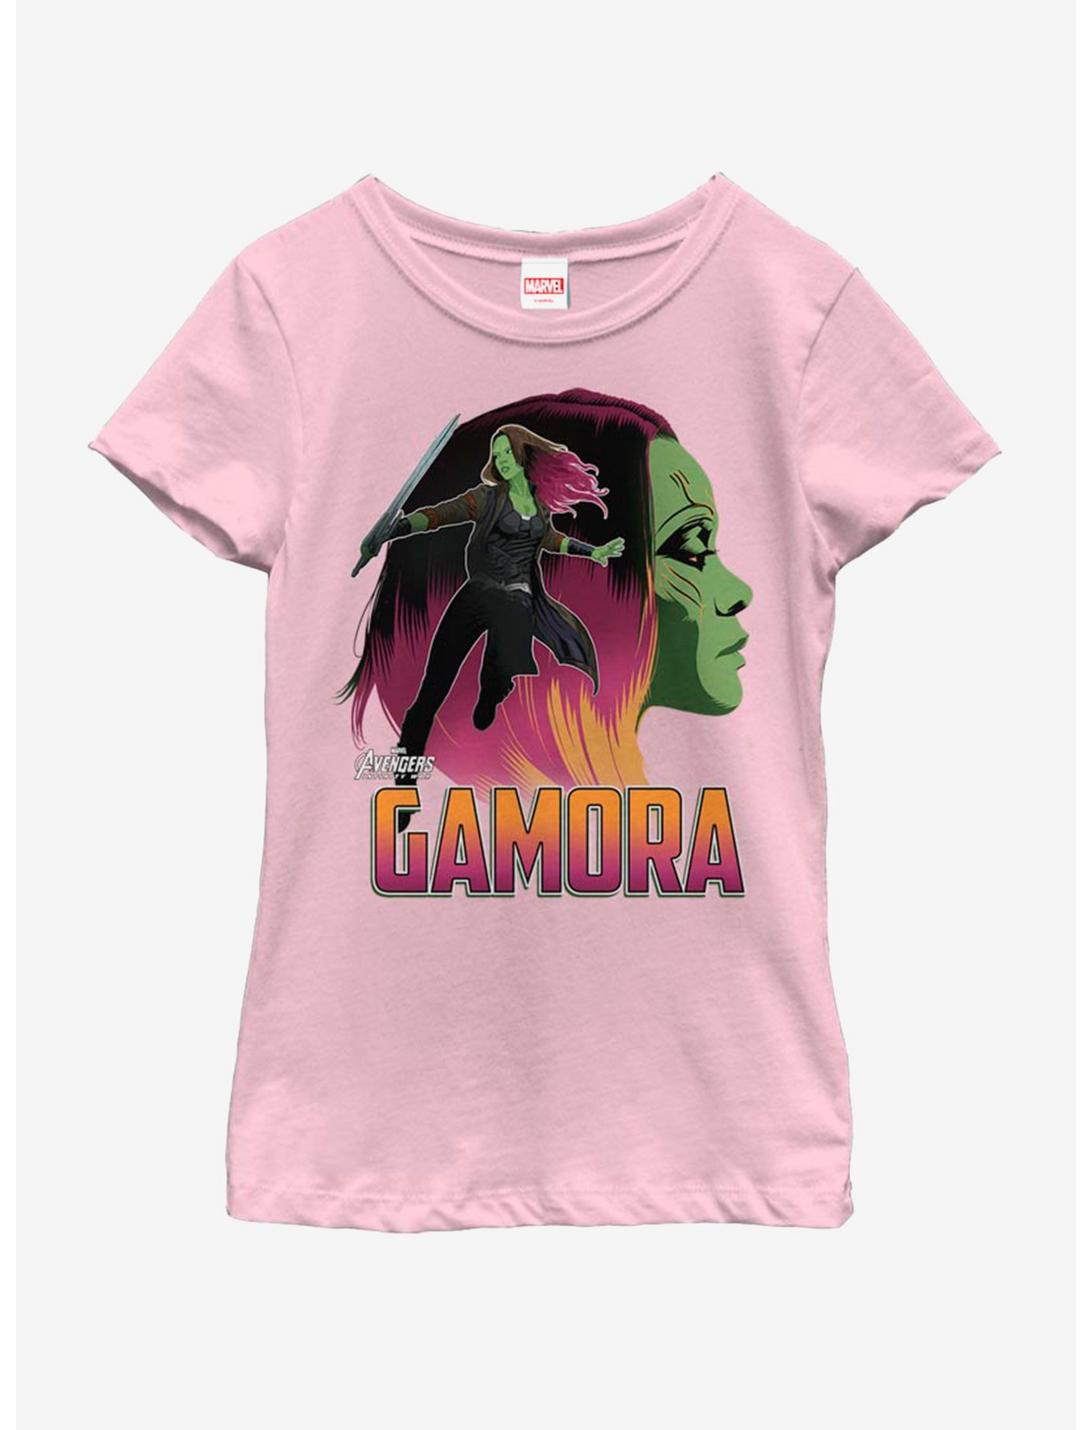 Marvel Avengers Infinity War Gamora Sil Youth Girls T-Shirt, PINK, hi-res